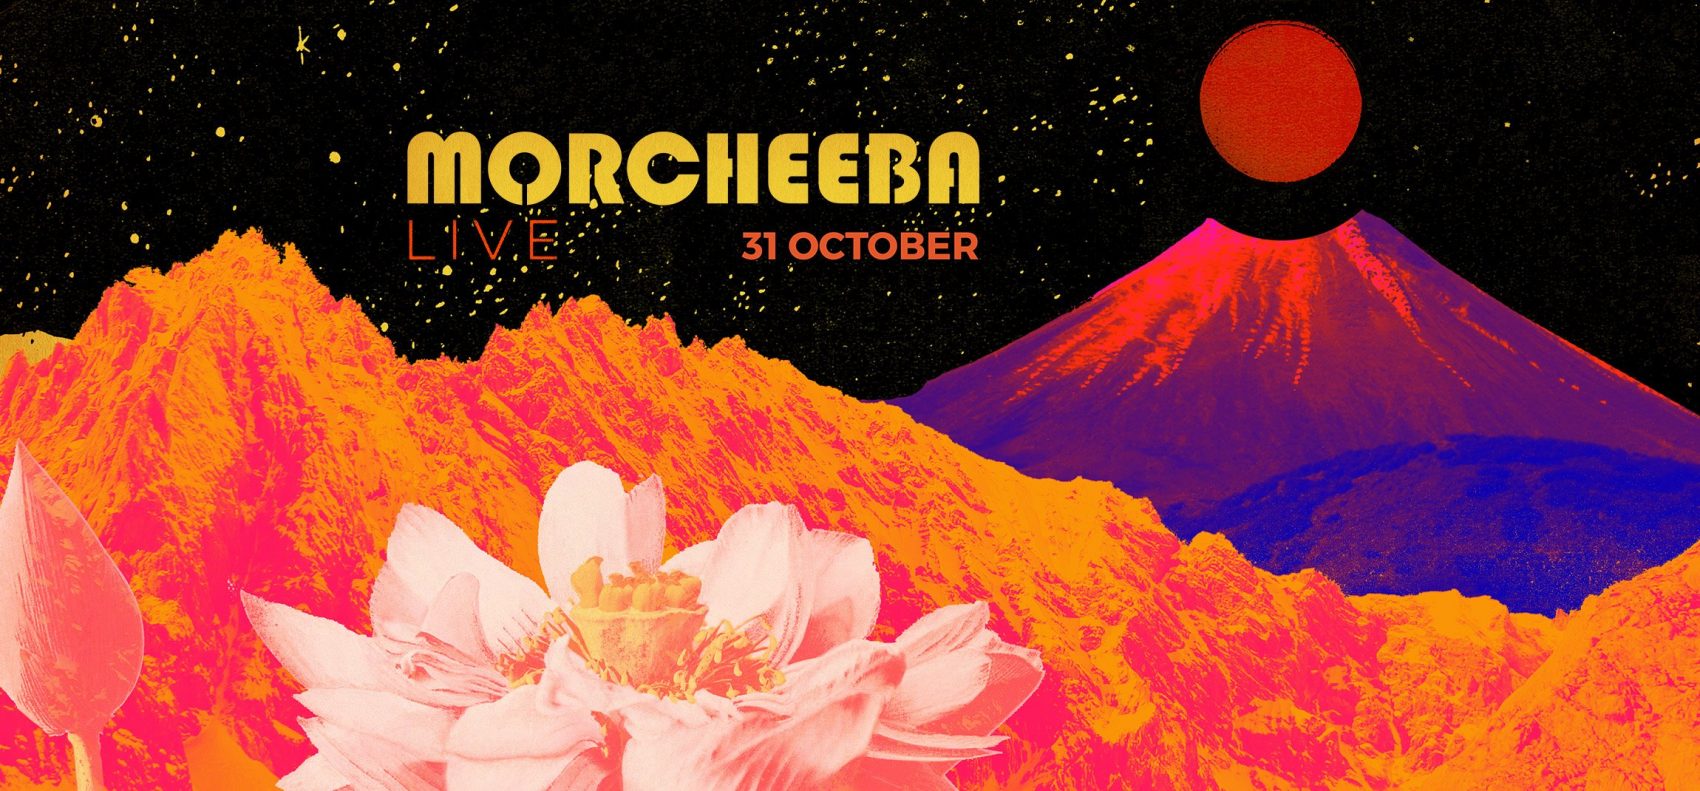 Morcheeba Live at the Dubai Opera - Coming Soon in UAE